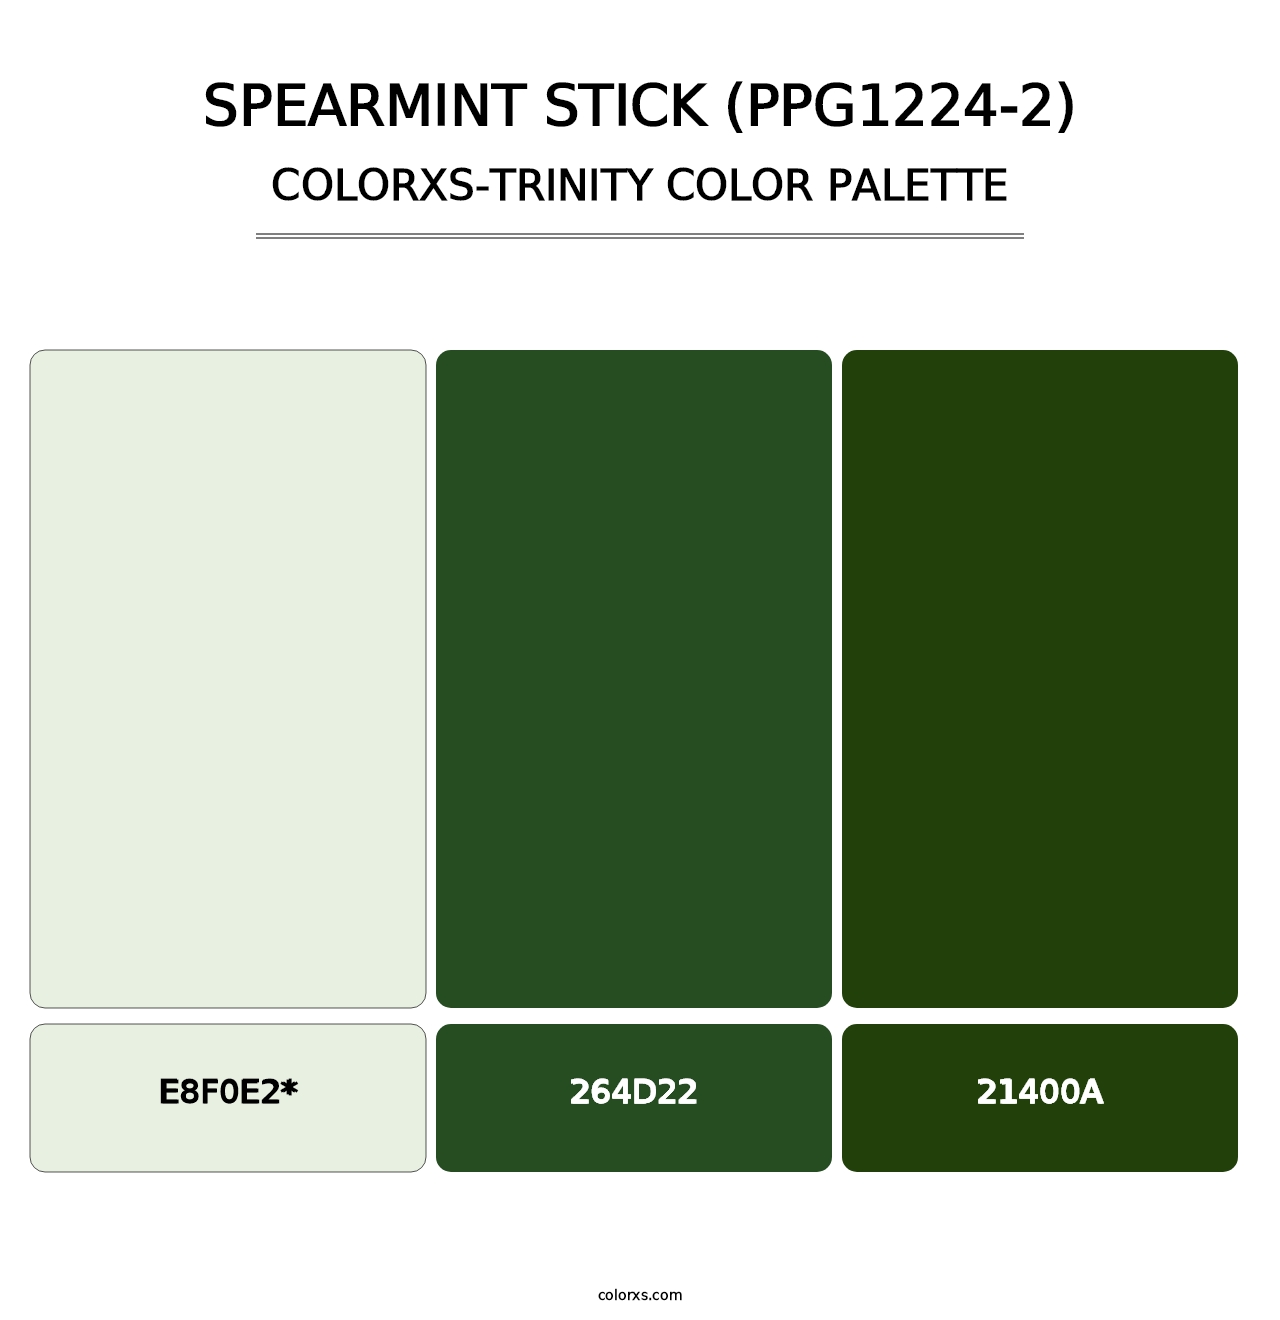 Spearmint Stick (PPG1224-2) - Colorxs Trinity Palette